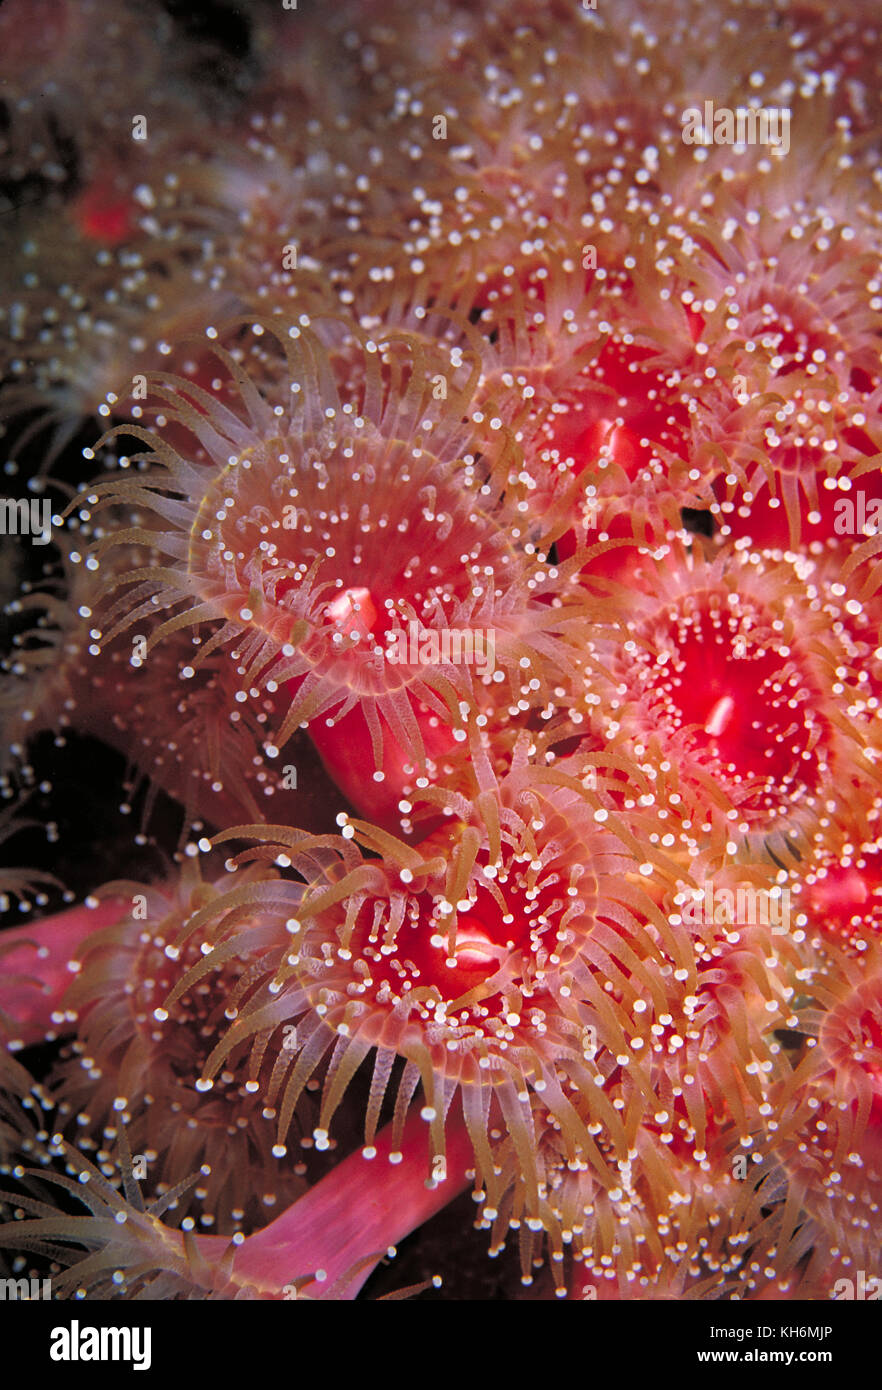 Strawberry Anemone, Corynactis californica, California Stock Photo